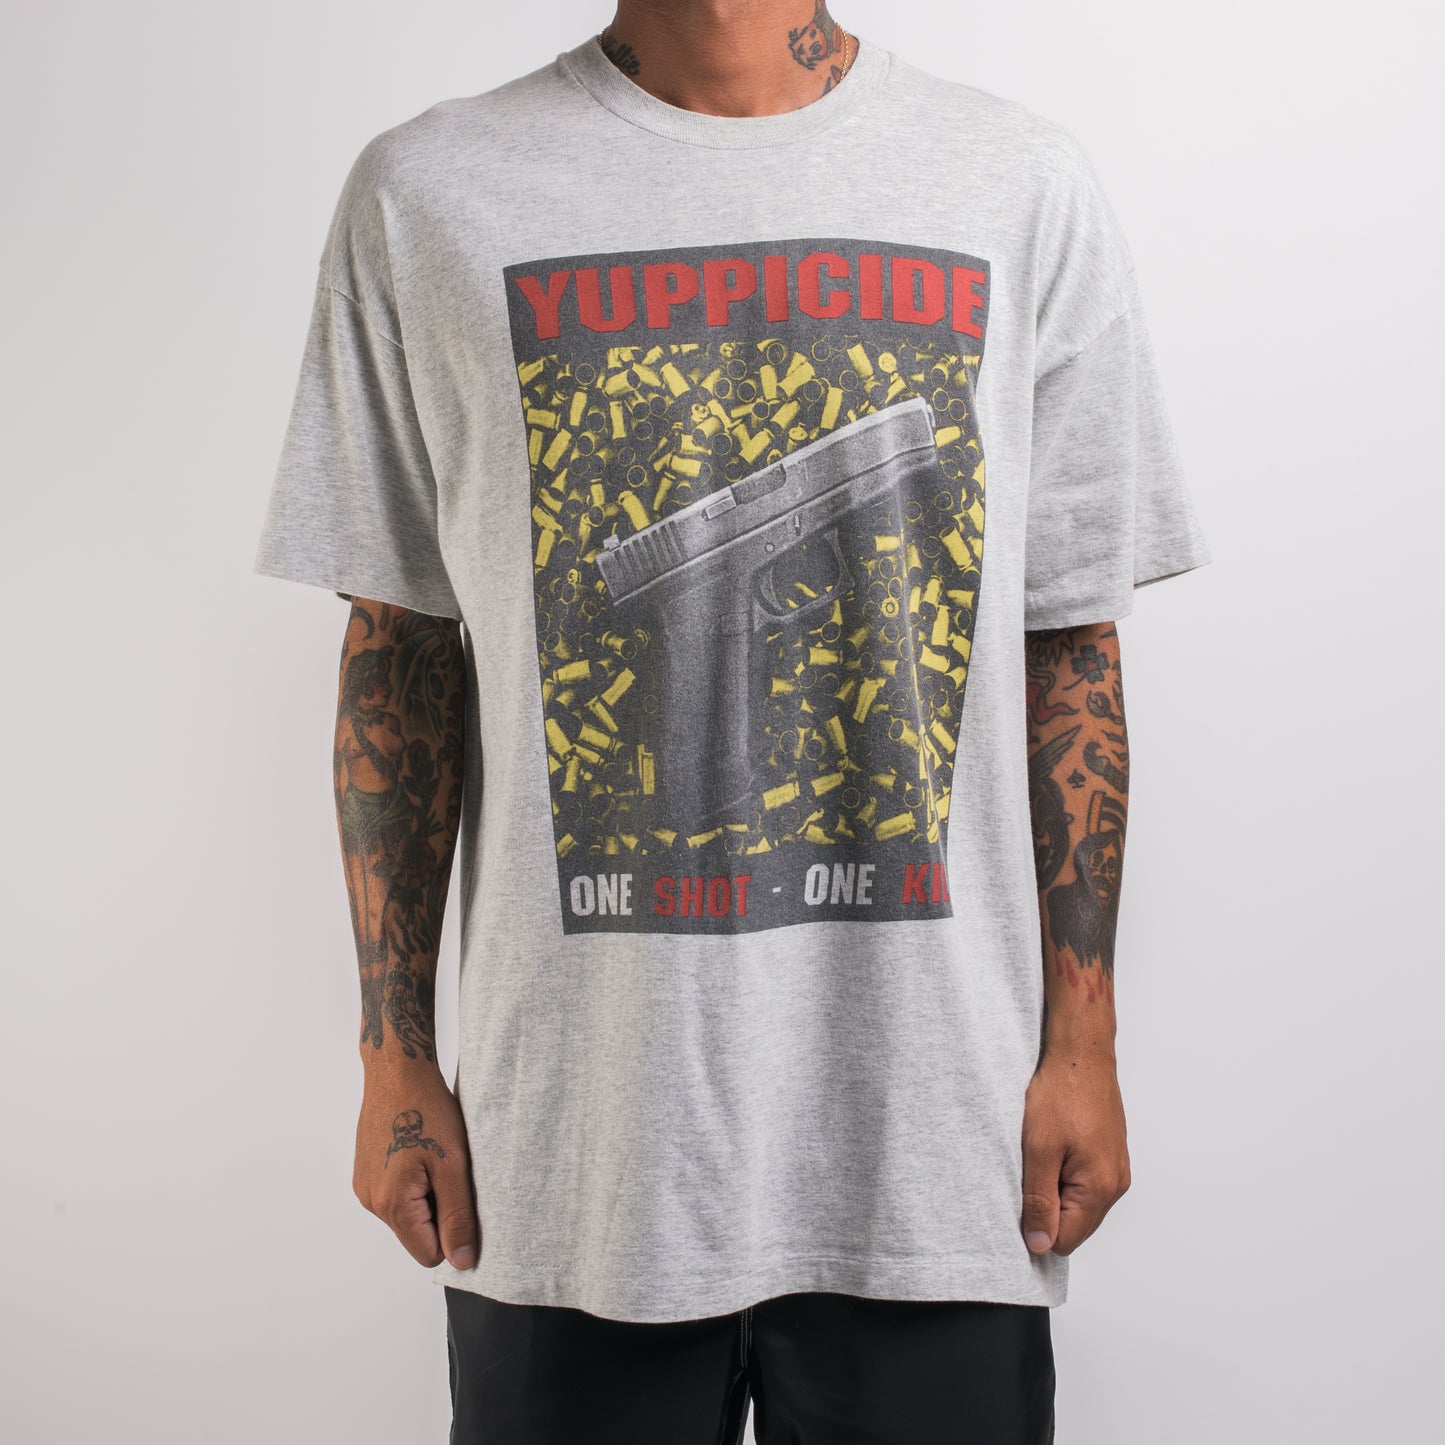 Vintage 90’s Yuppicide One Shot - One Kill T-Shirt